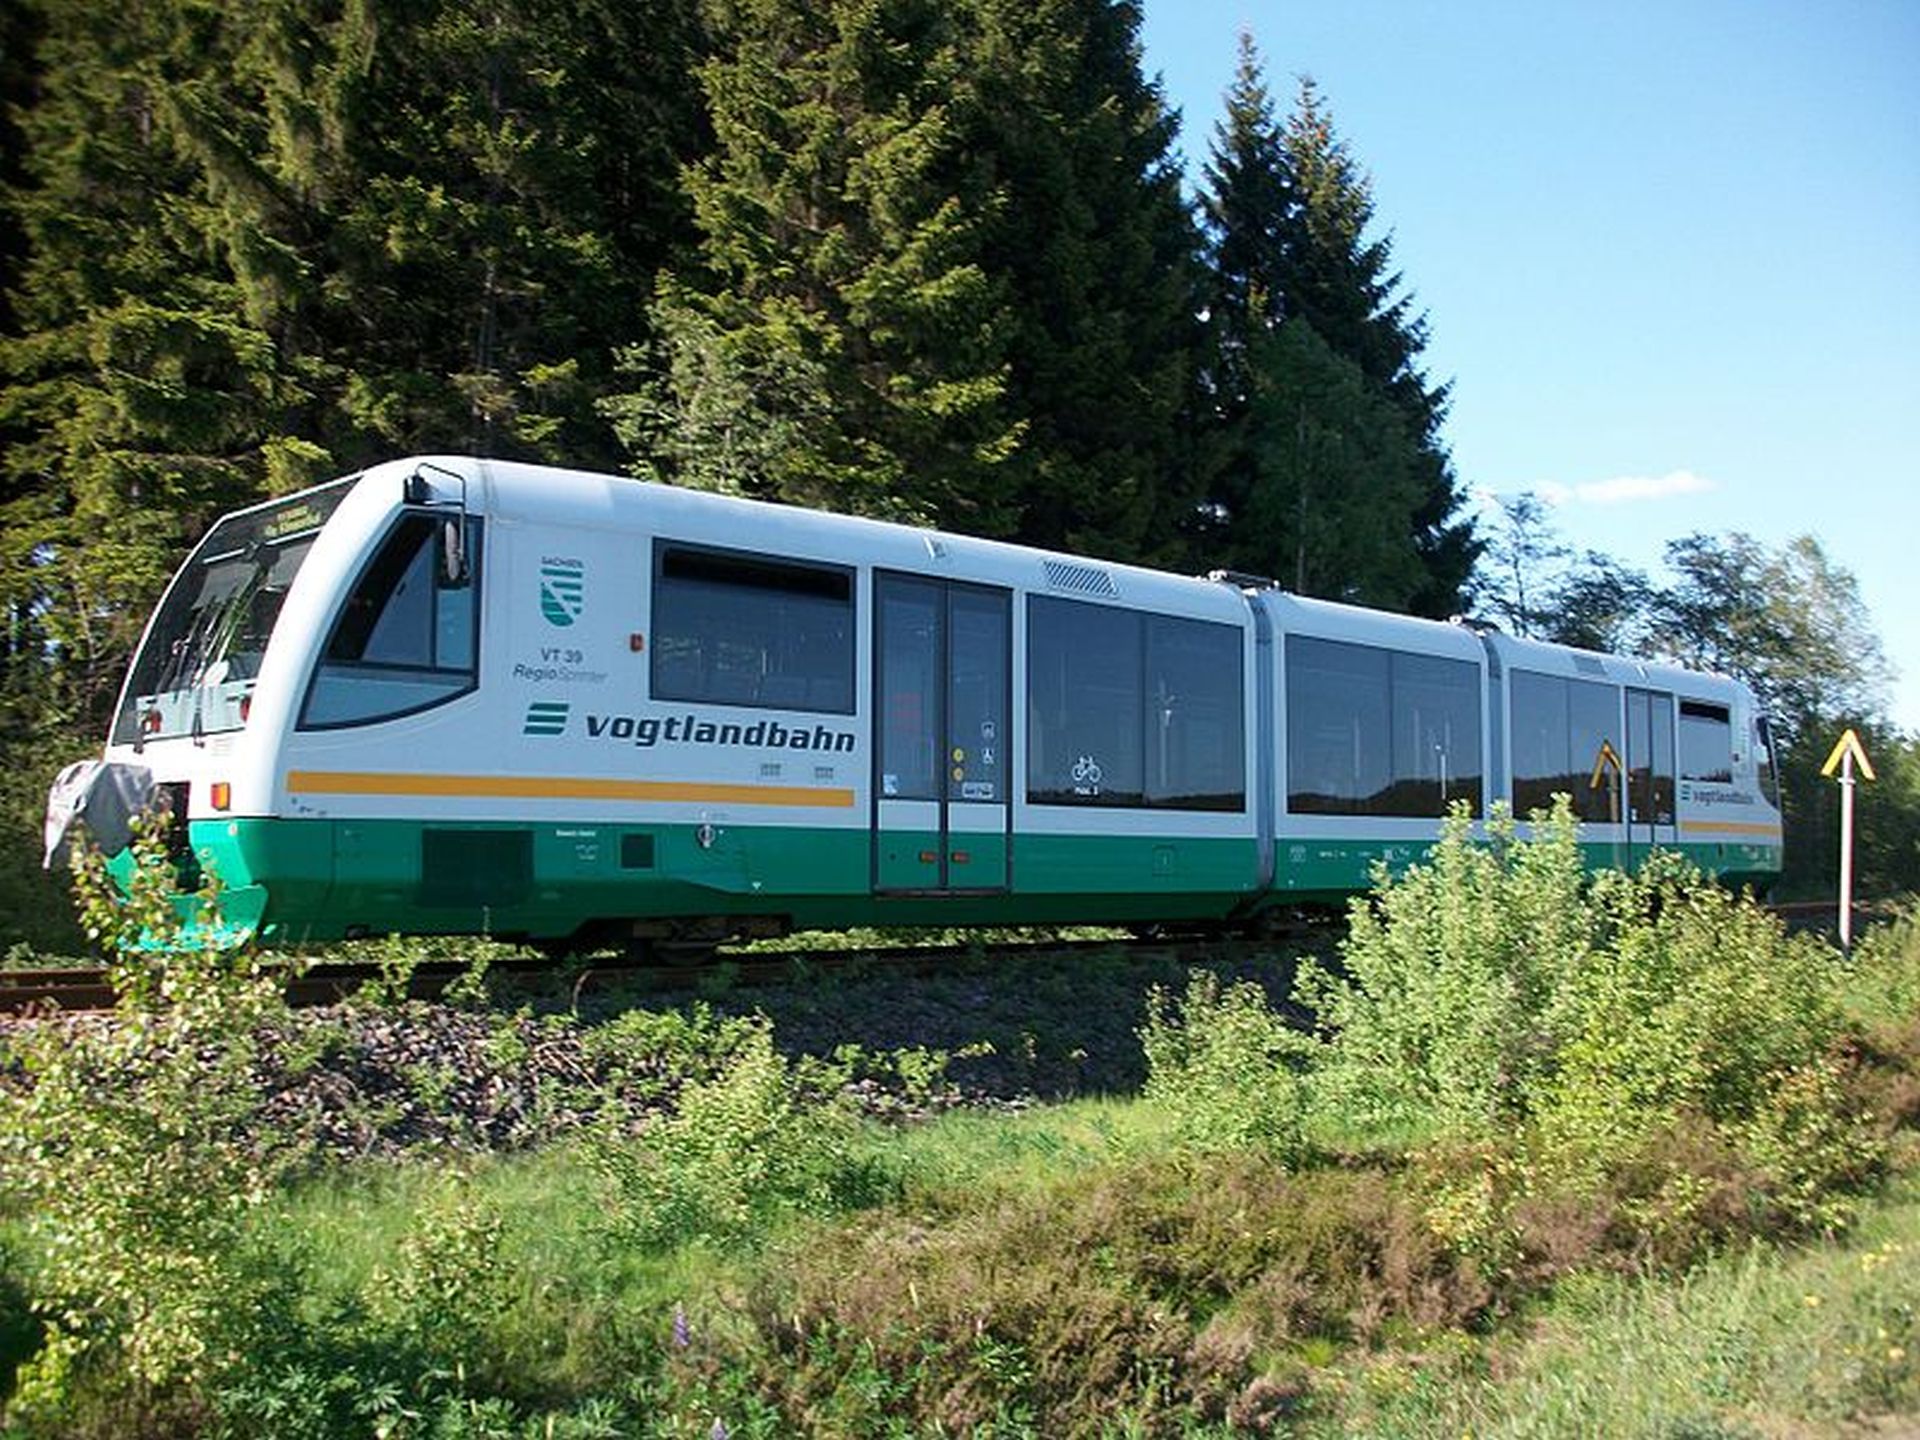 Jednotka RegioSprinter v barvách Vogtlandbahn, který patří pod Die Länderbahn. Foto: Aagnverglaser - Wikimedia Commons